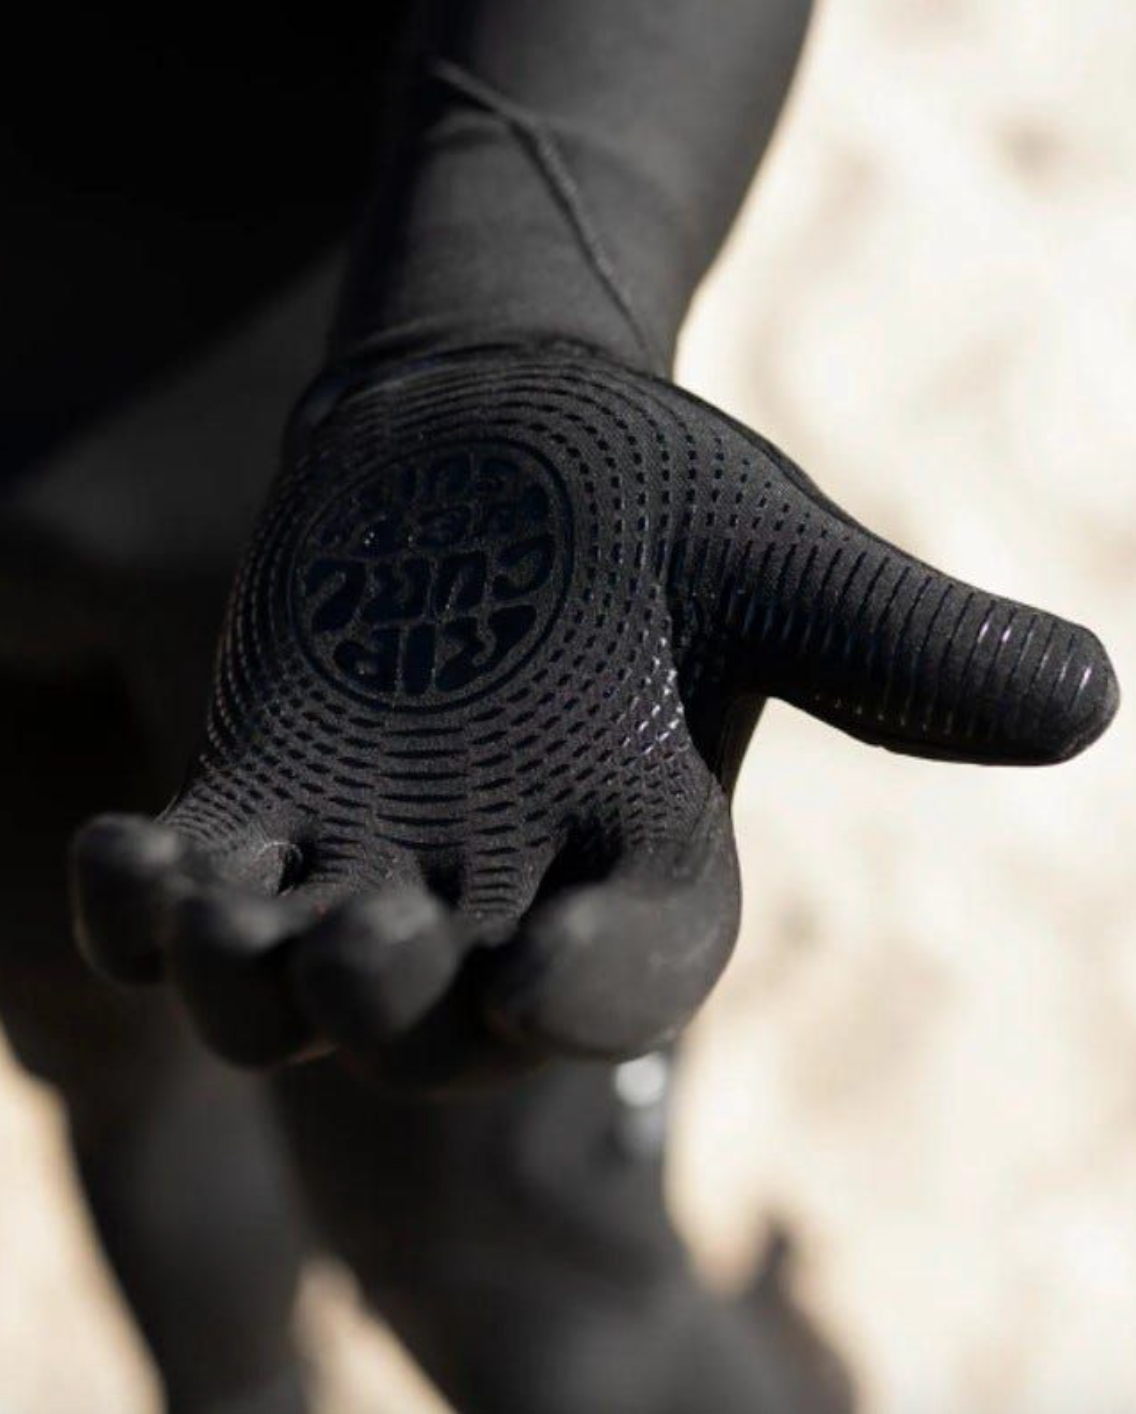 Rip Curl Flashbomb 5mm 5 Finger Glove